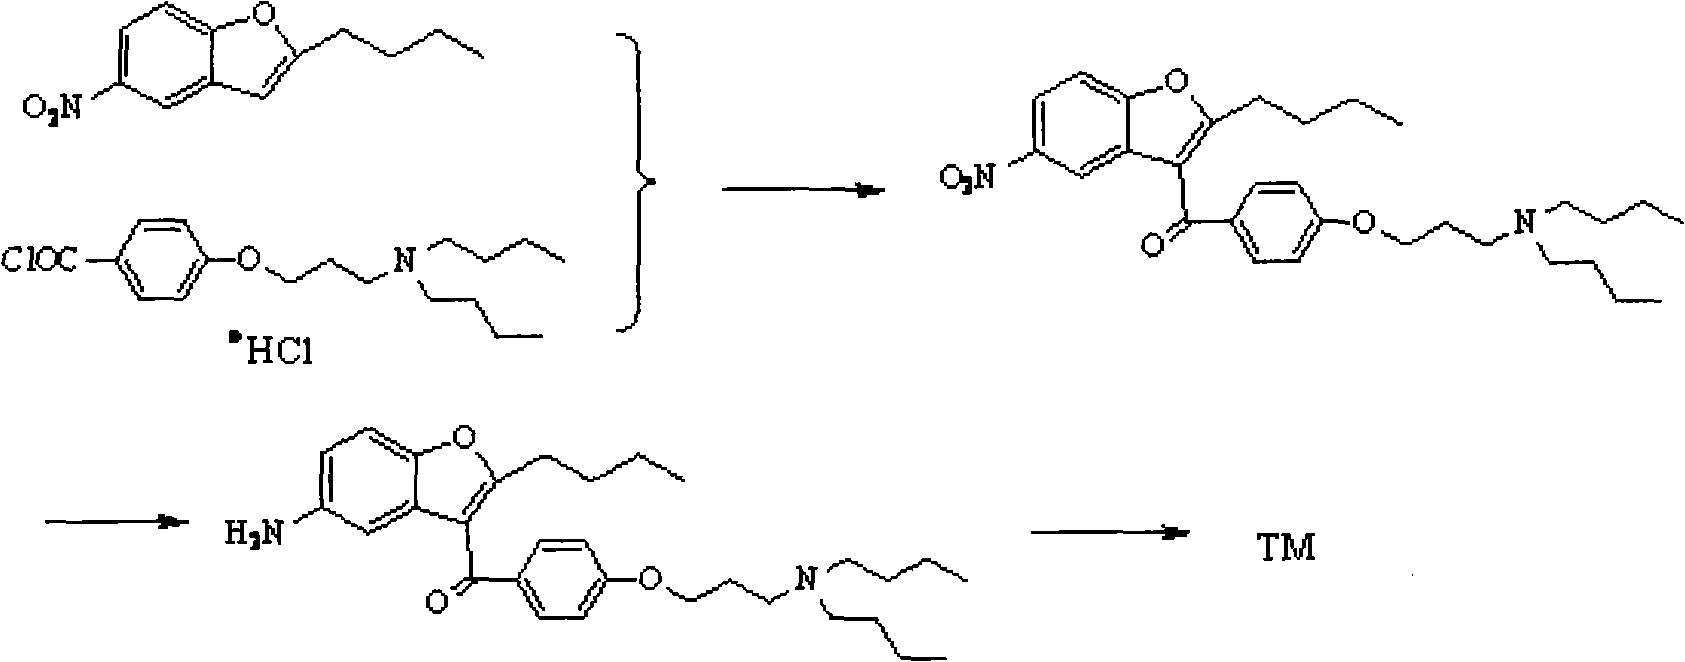 Novel method for synthesizing dronedarone key intermediate